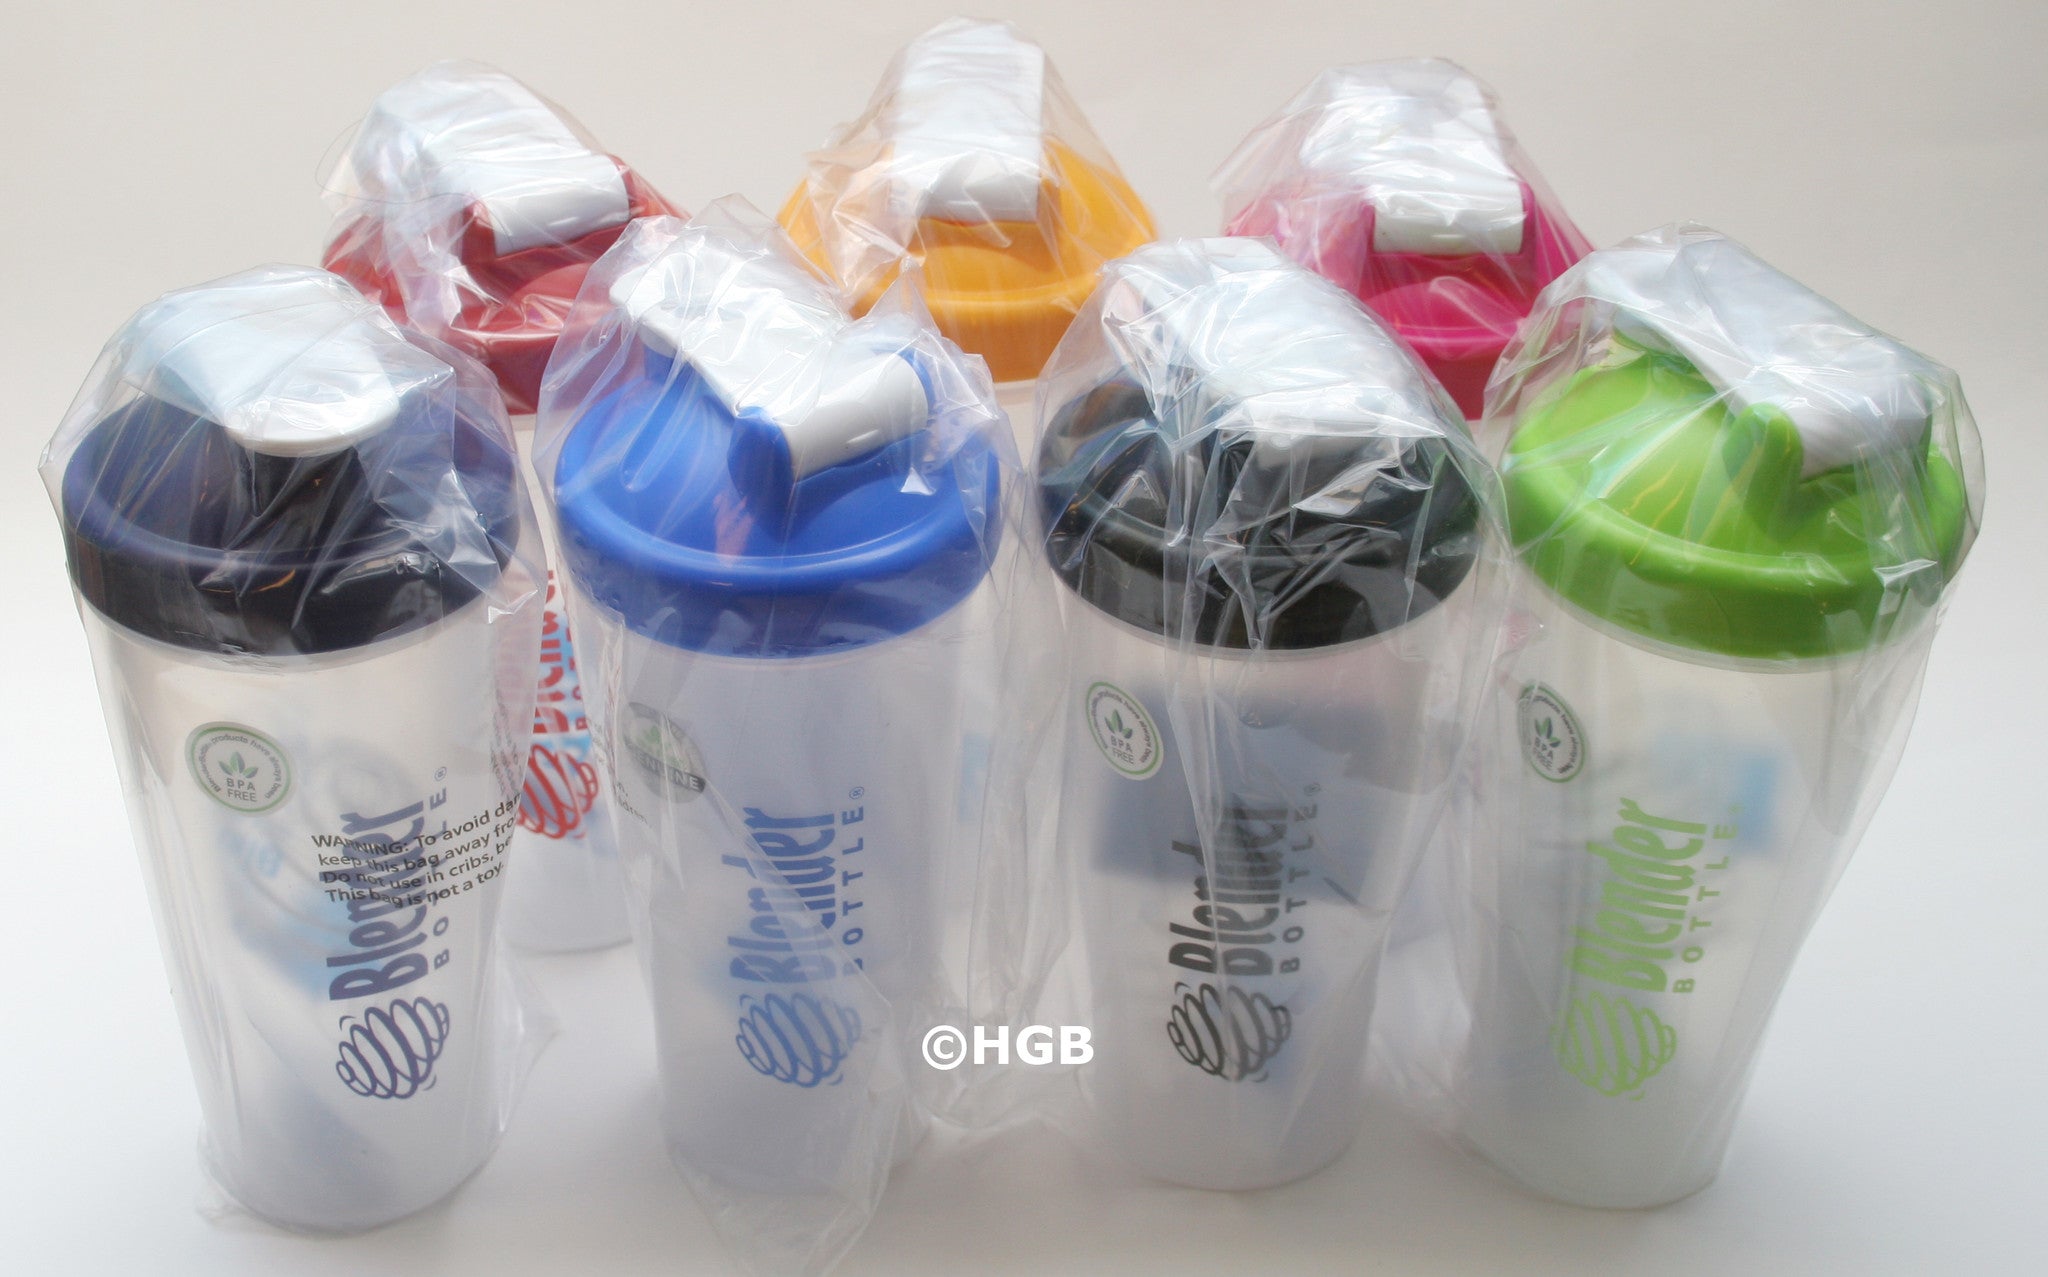 Shaker Bottles for Protein Mixes, 28 oz, Shaker Bottle with Wire Whisk  Ball, Protein Shaker Bottle